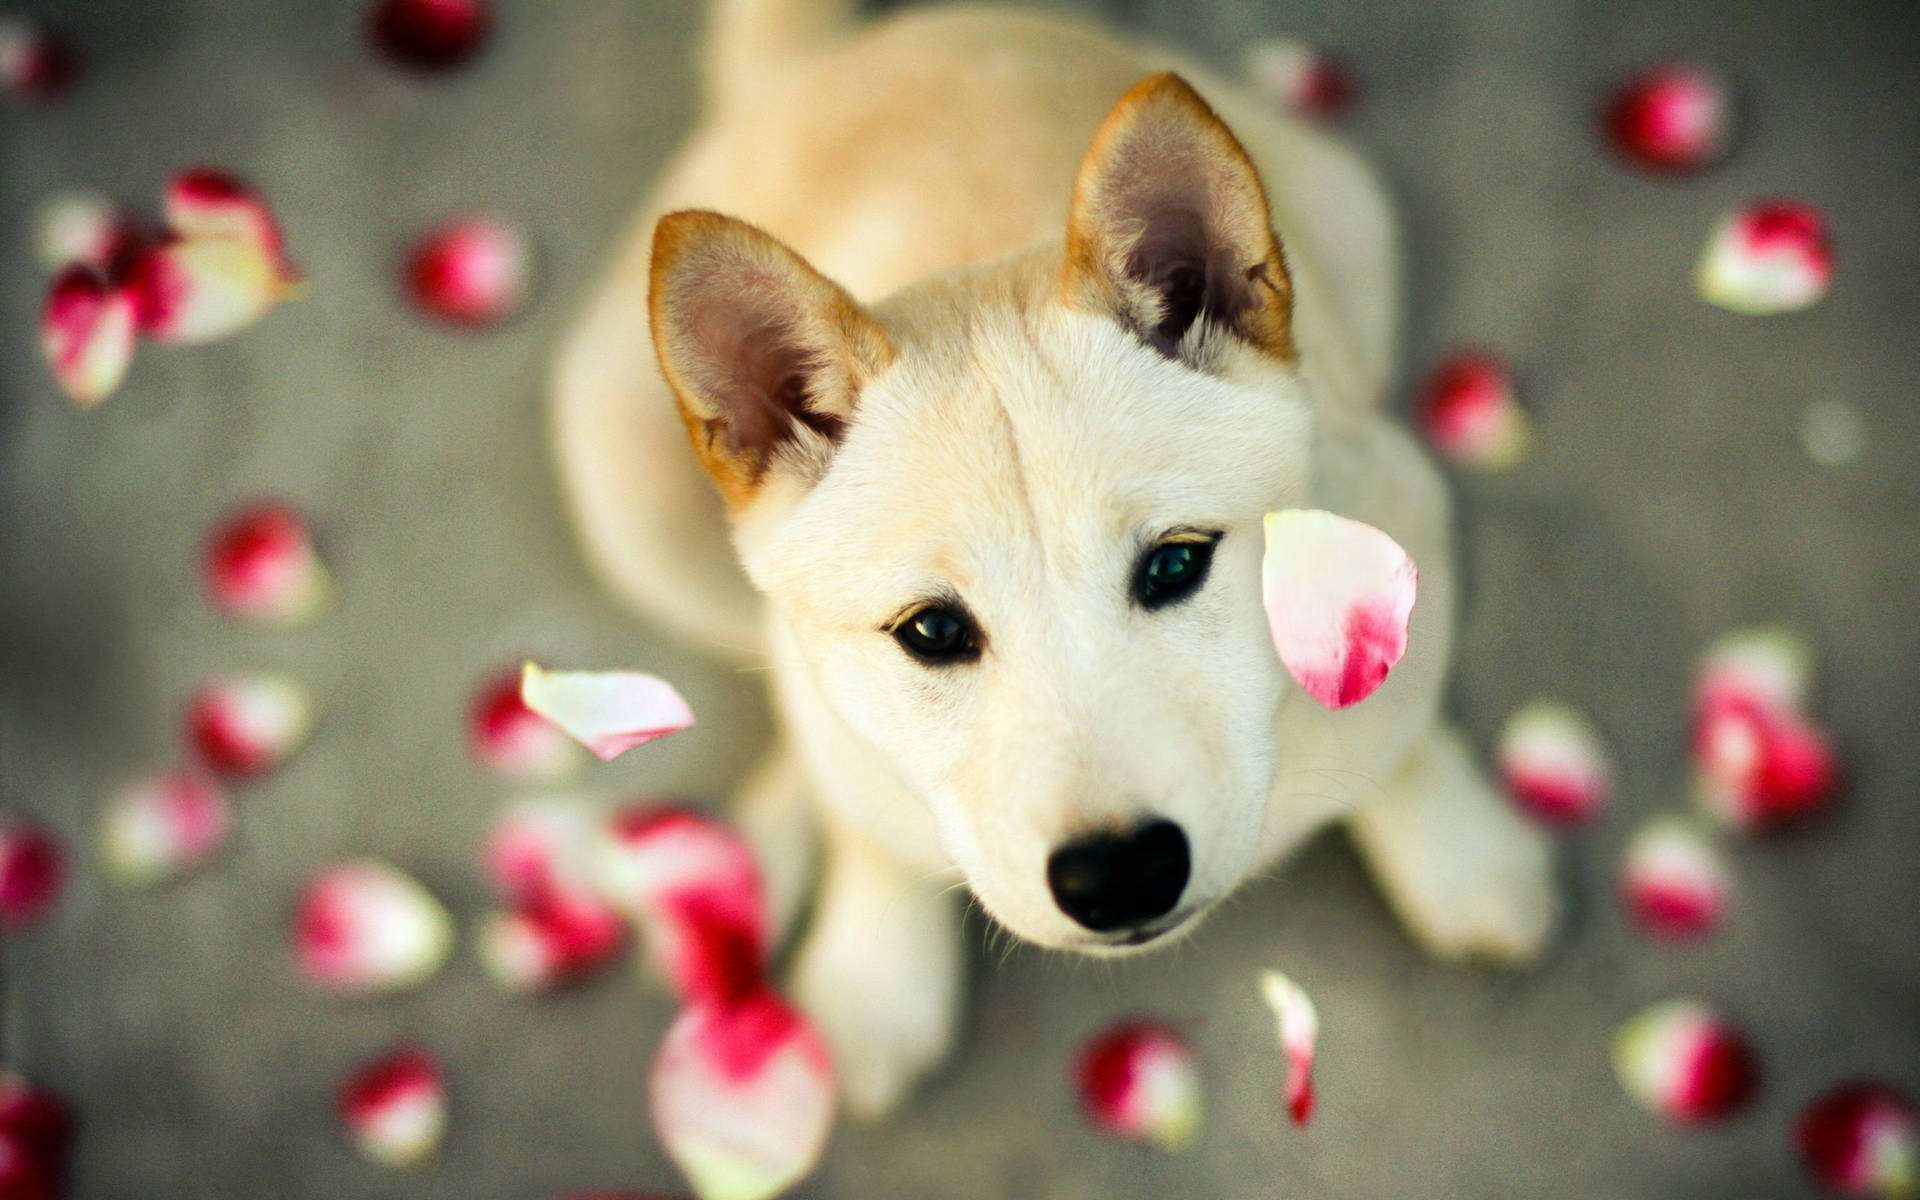 Cute Dog In Flower Petals